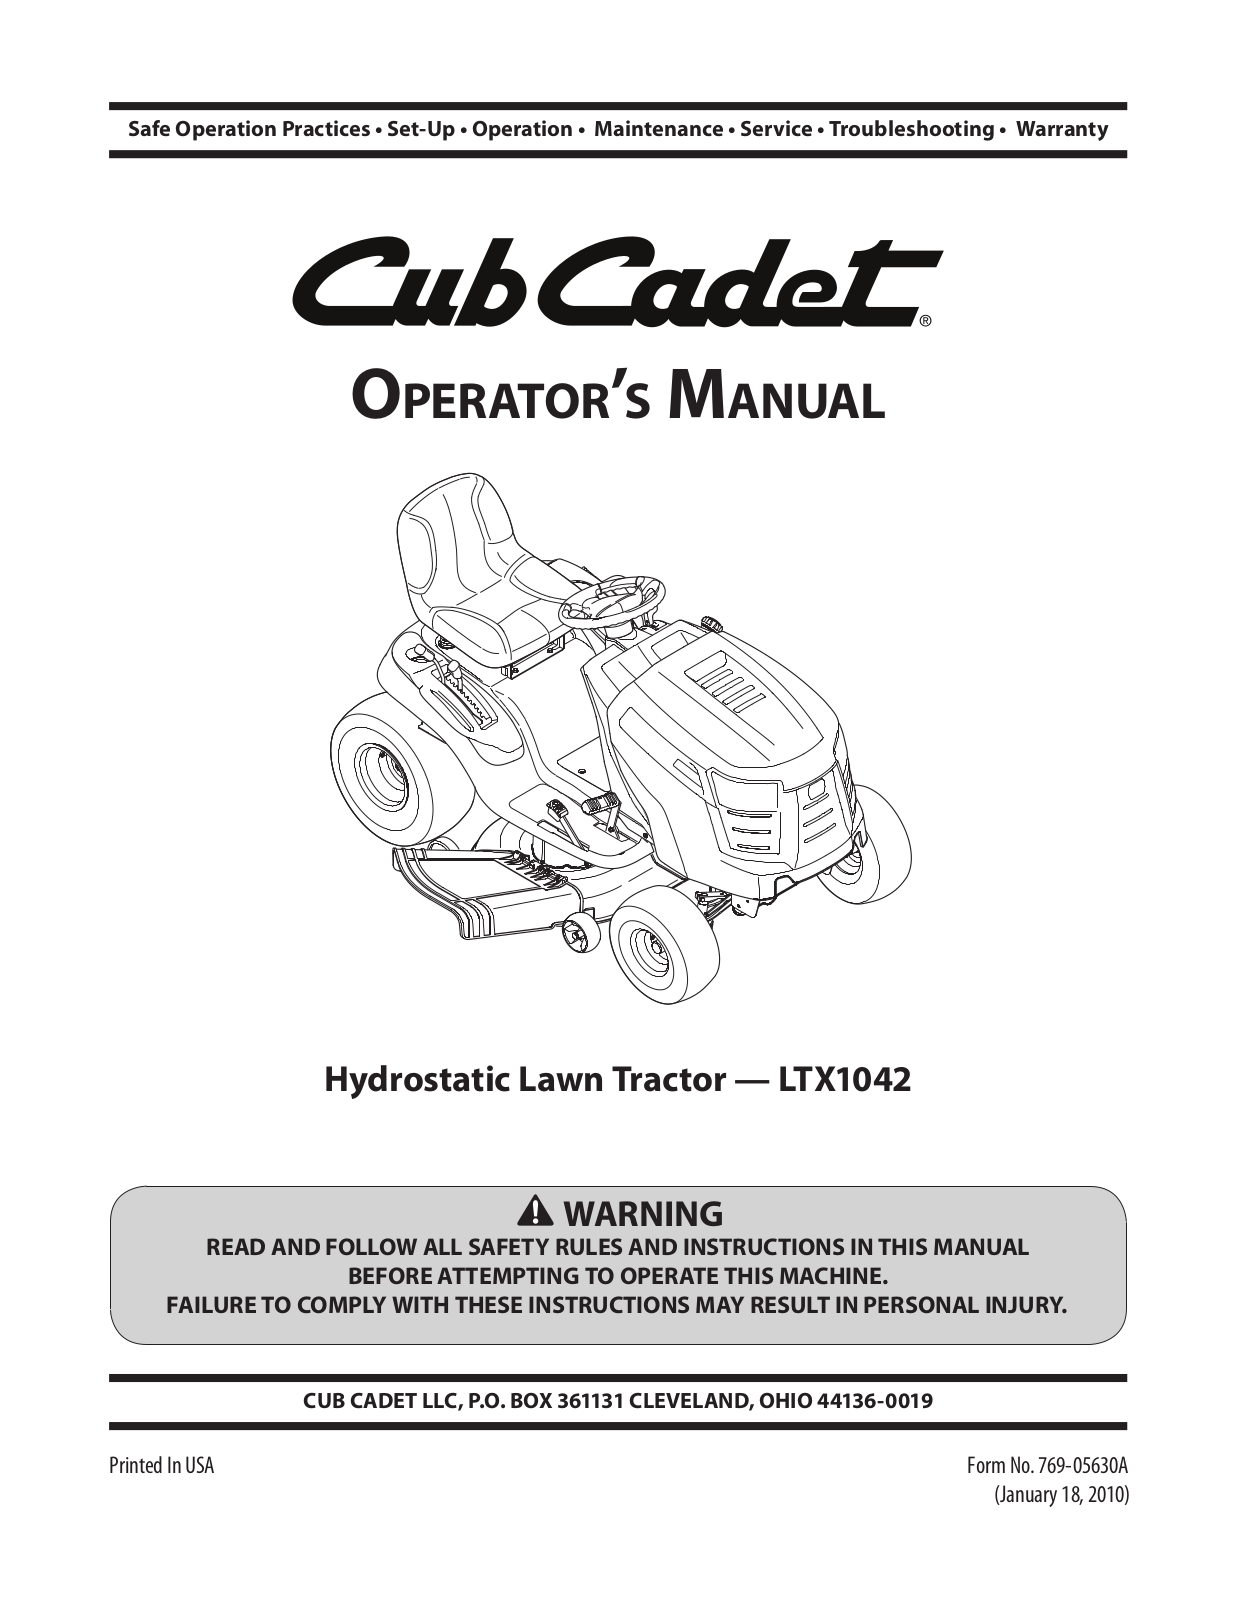 Cub cadet LTX1042 User Manual